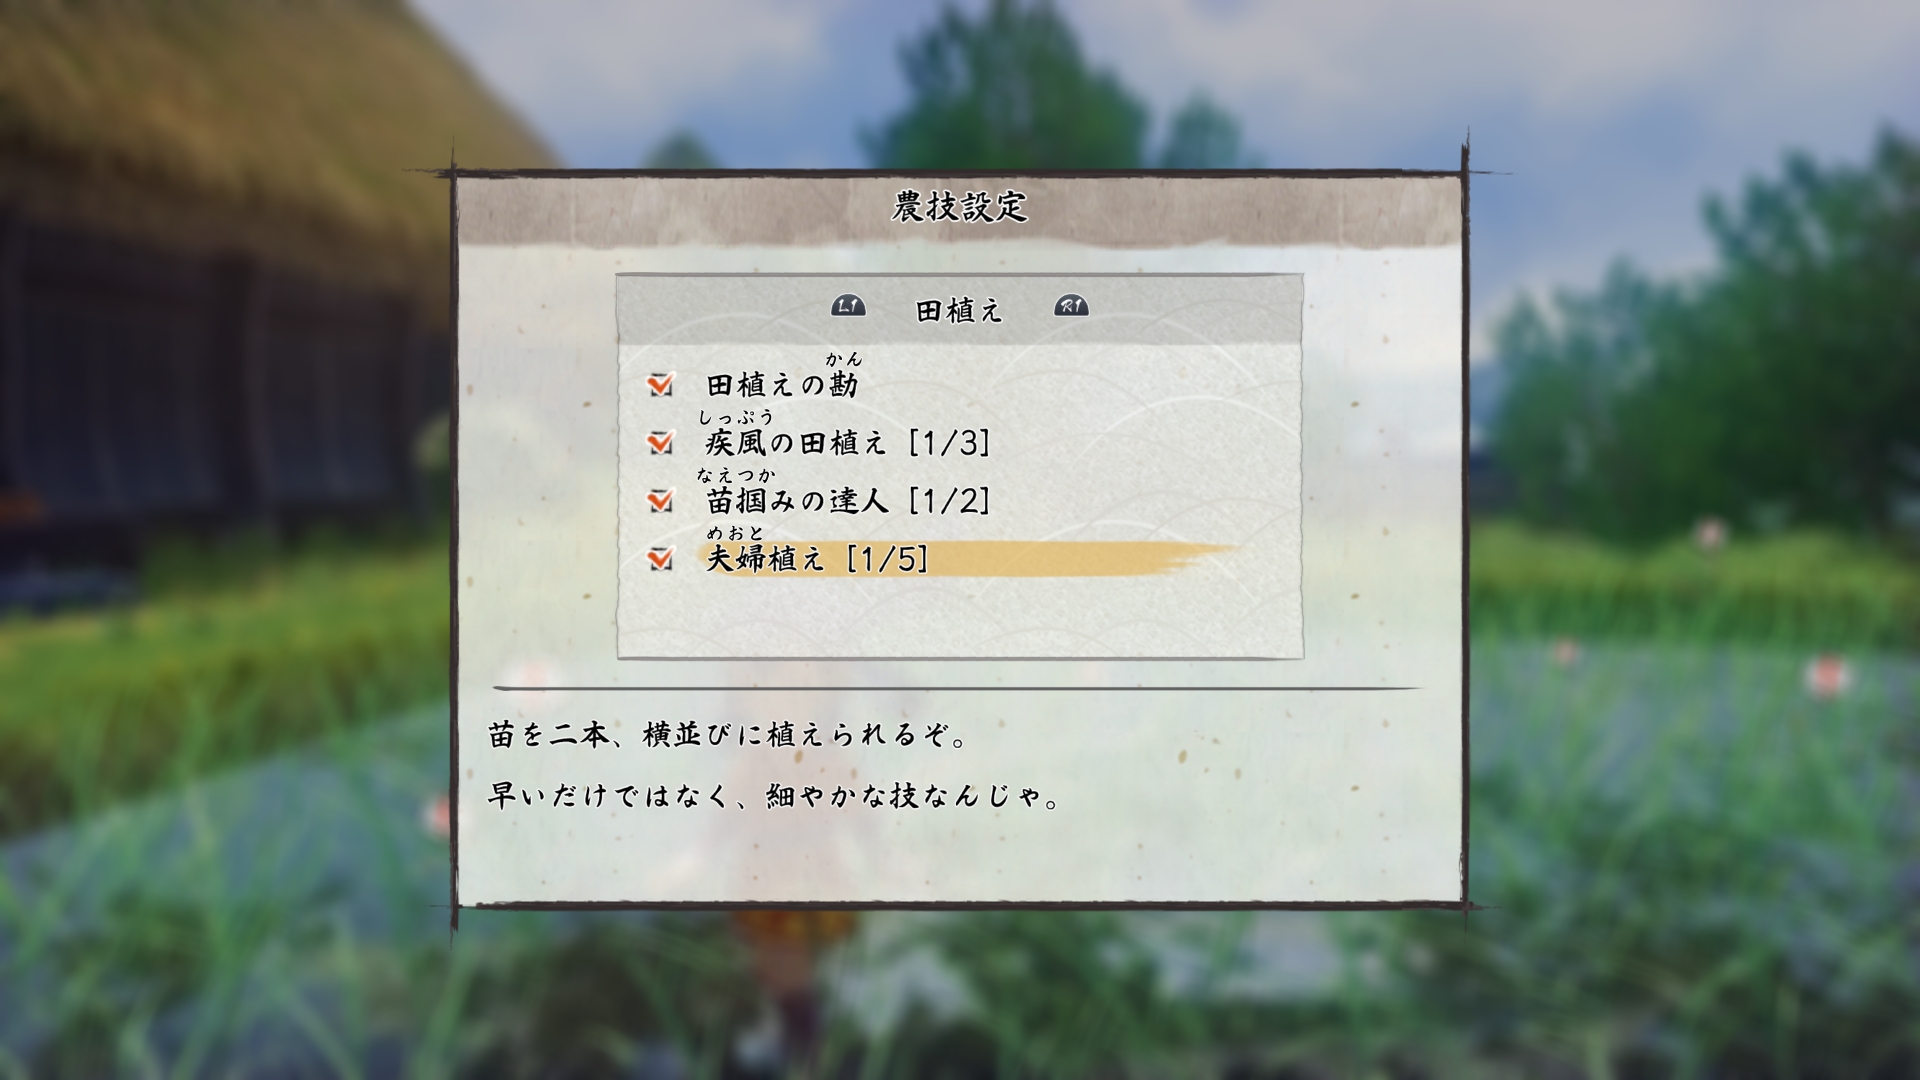 DMC v Shin Megami Tensei III a tutoriál ke Captainu Tsubasovi Sakuna Of Rice and Ruin 2020 08 11 20 013